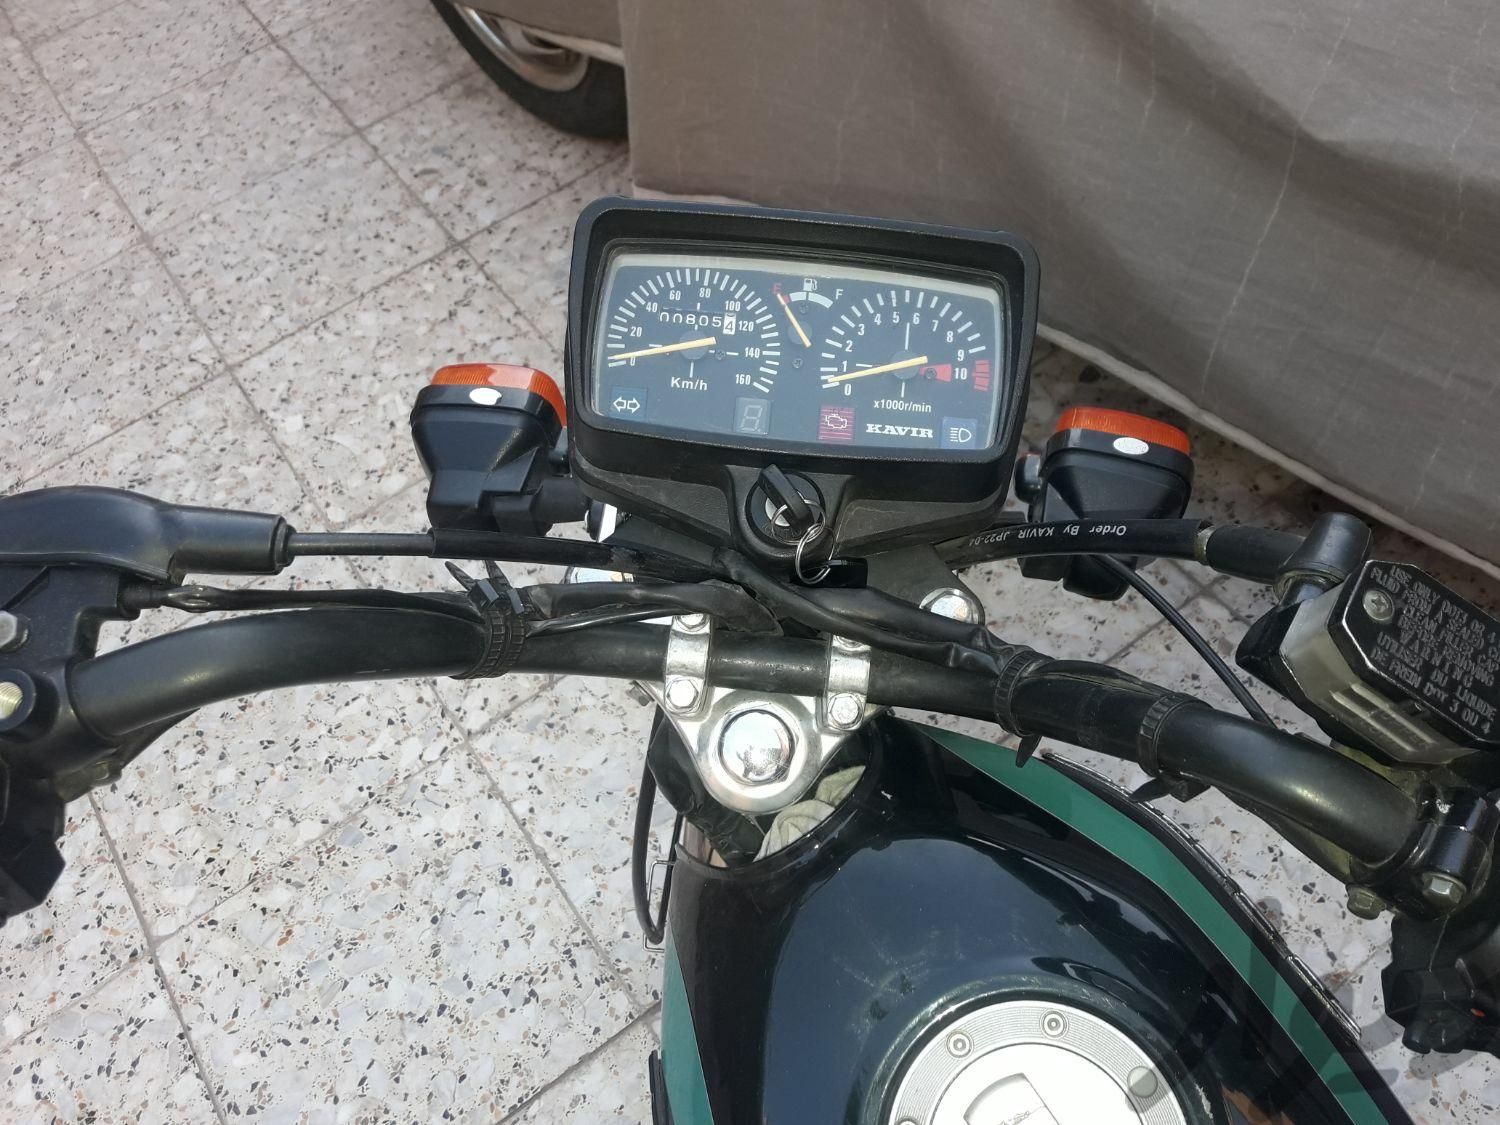 موتور سیکلت کویر ۲۰۰ کم کار ۱۴۰۱|موتورسیکلت|اصفهان, ابر|دیوار